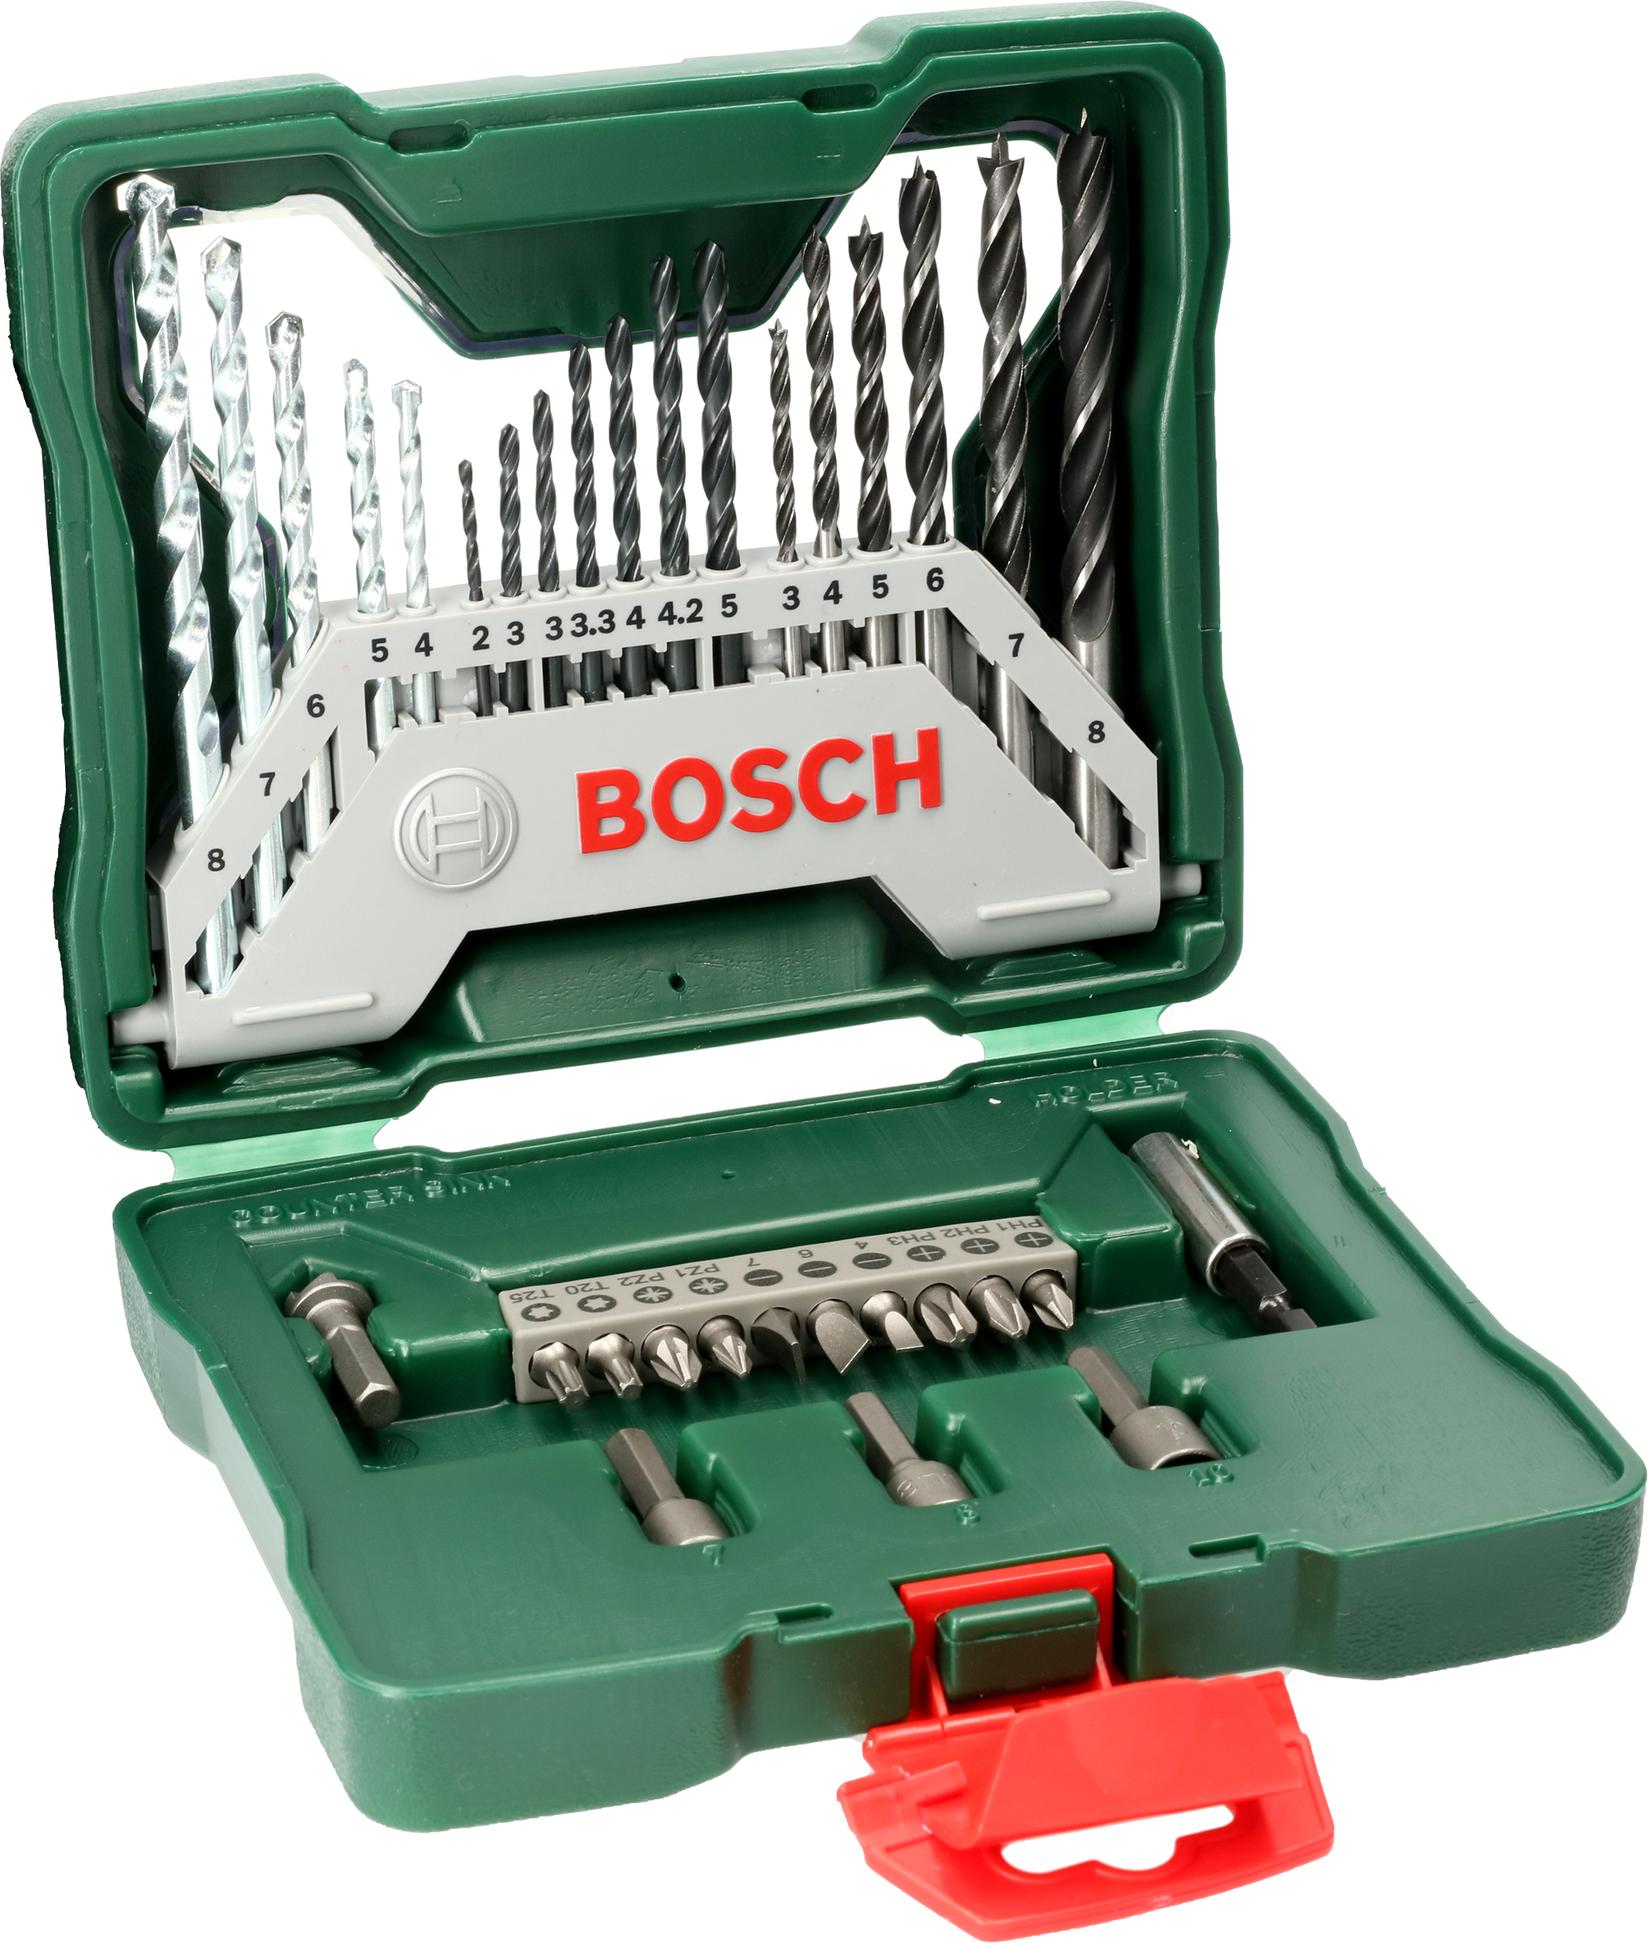 Bosch 33-delni X-Line set 2607019324